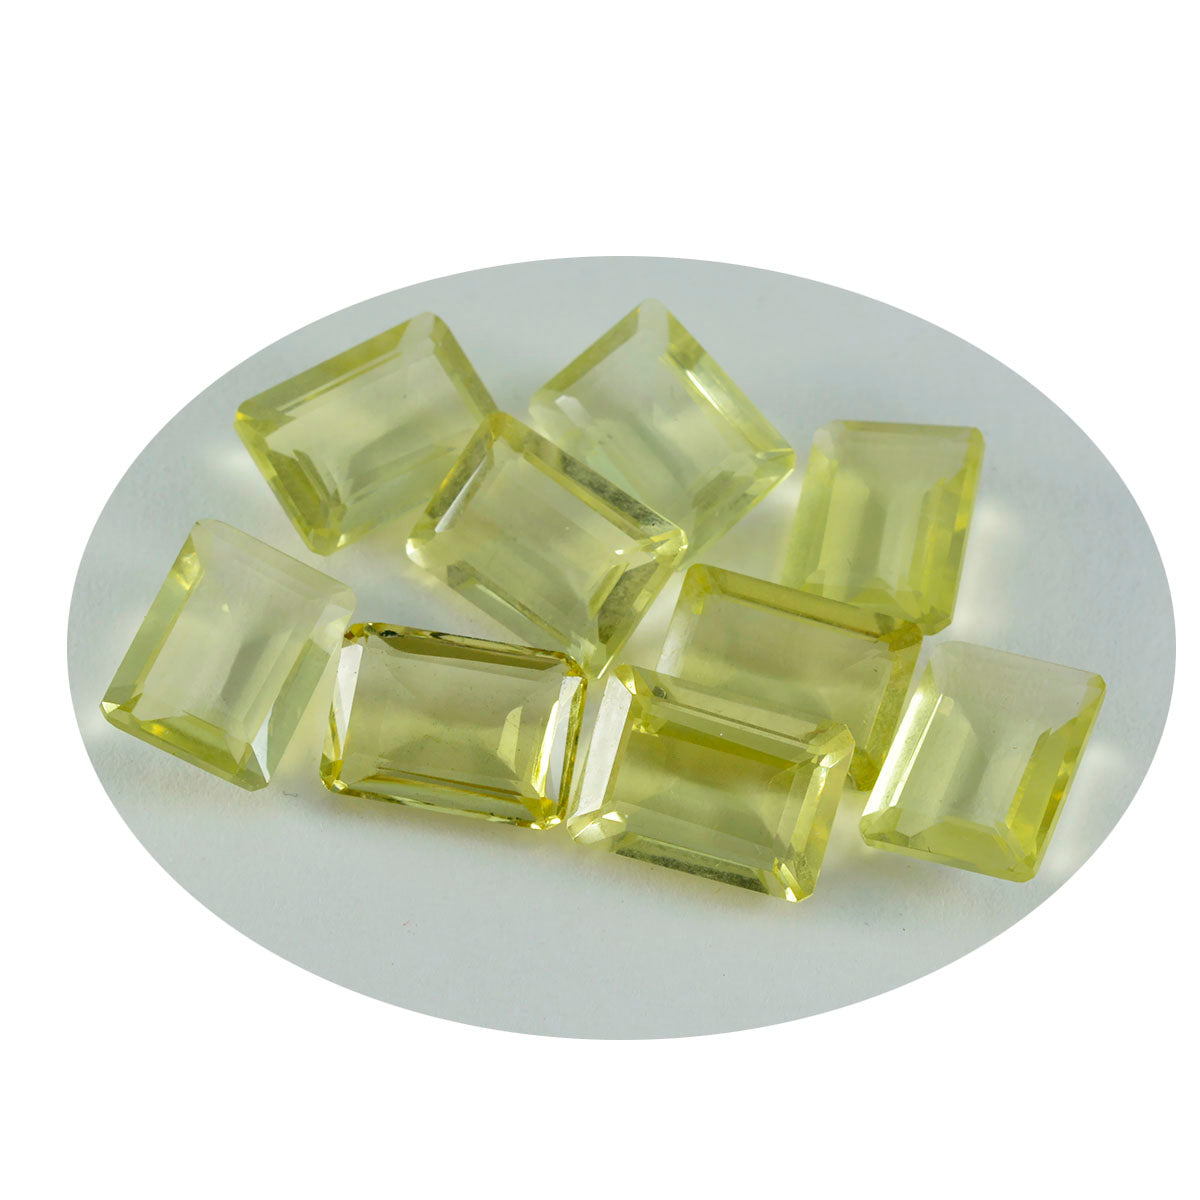 Riyogems 1PC Yellow Lemon Quartz Faceted 8x10 mm Octagon Shape Nice Quality Gems